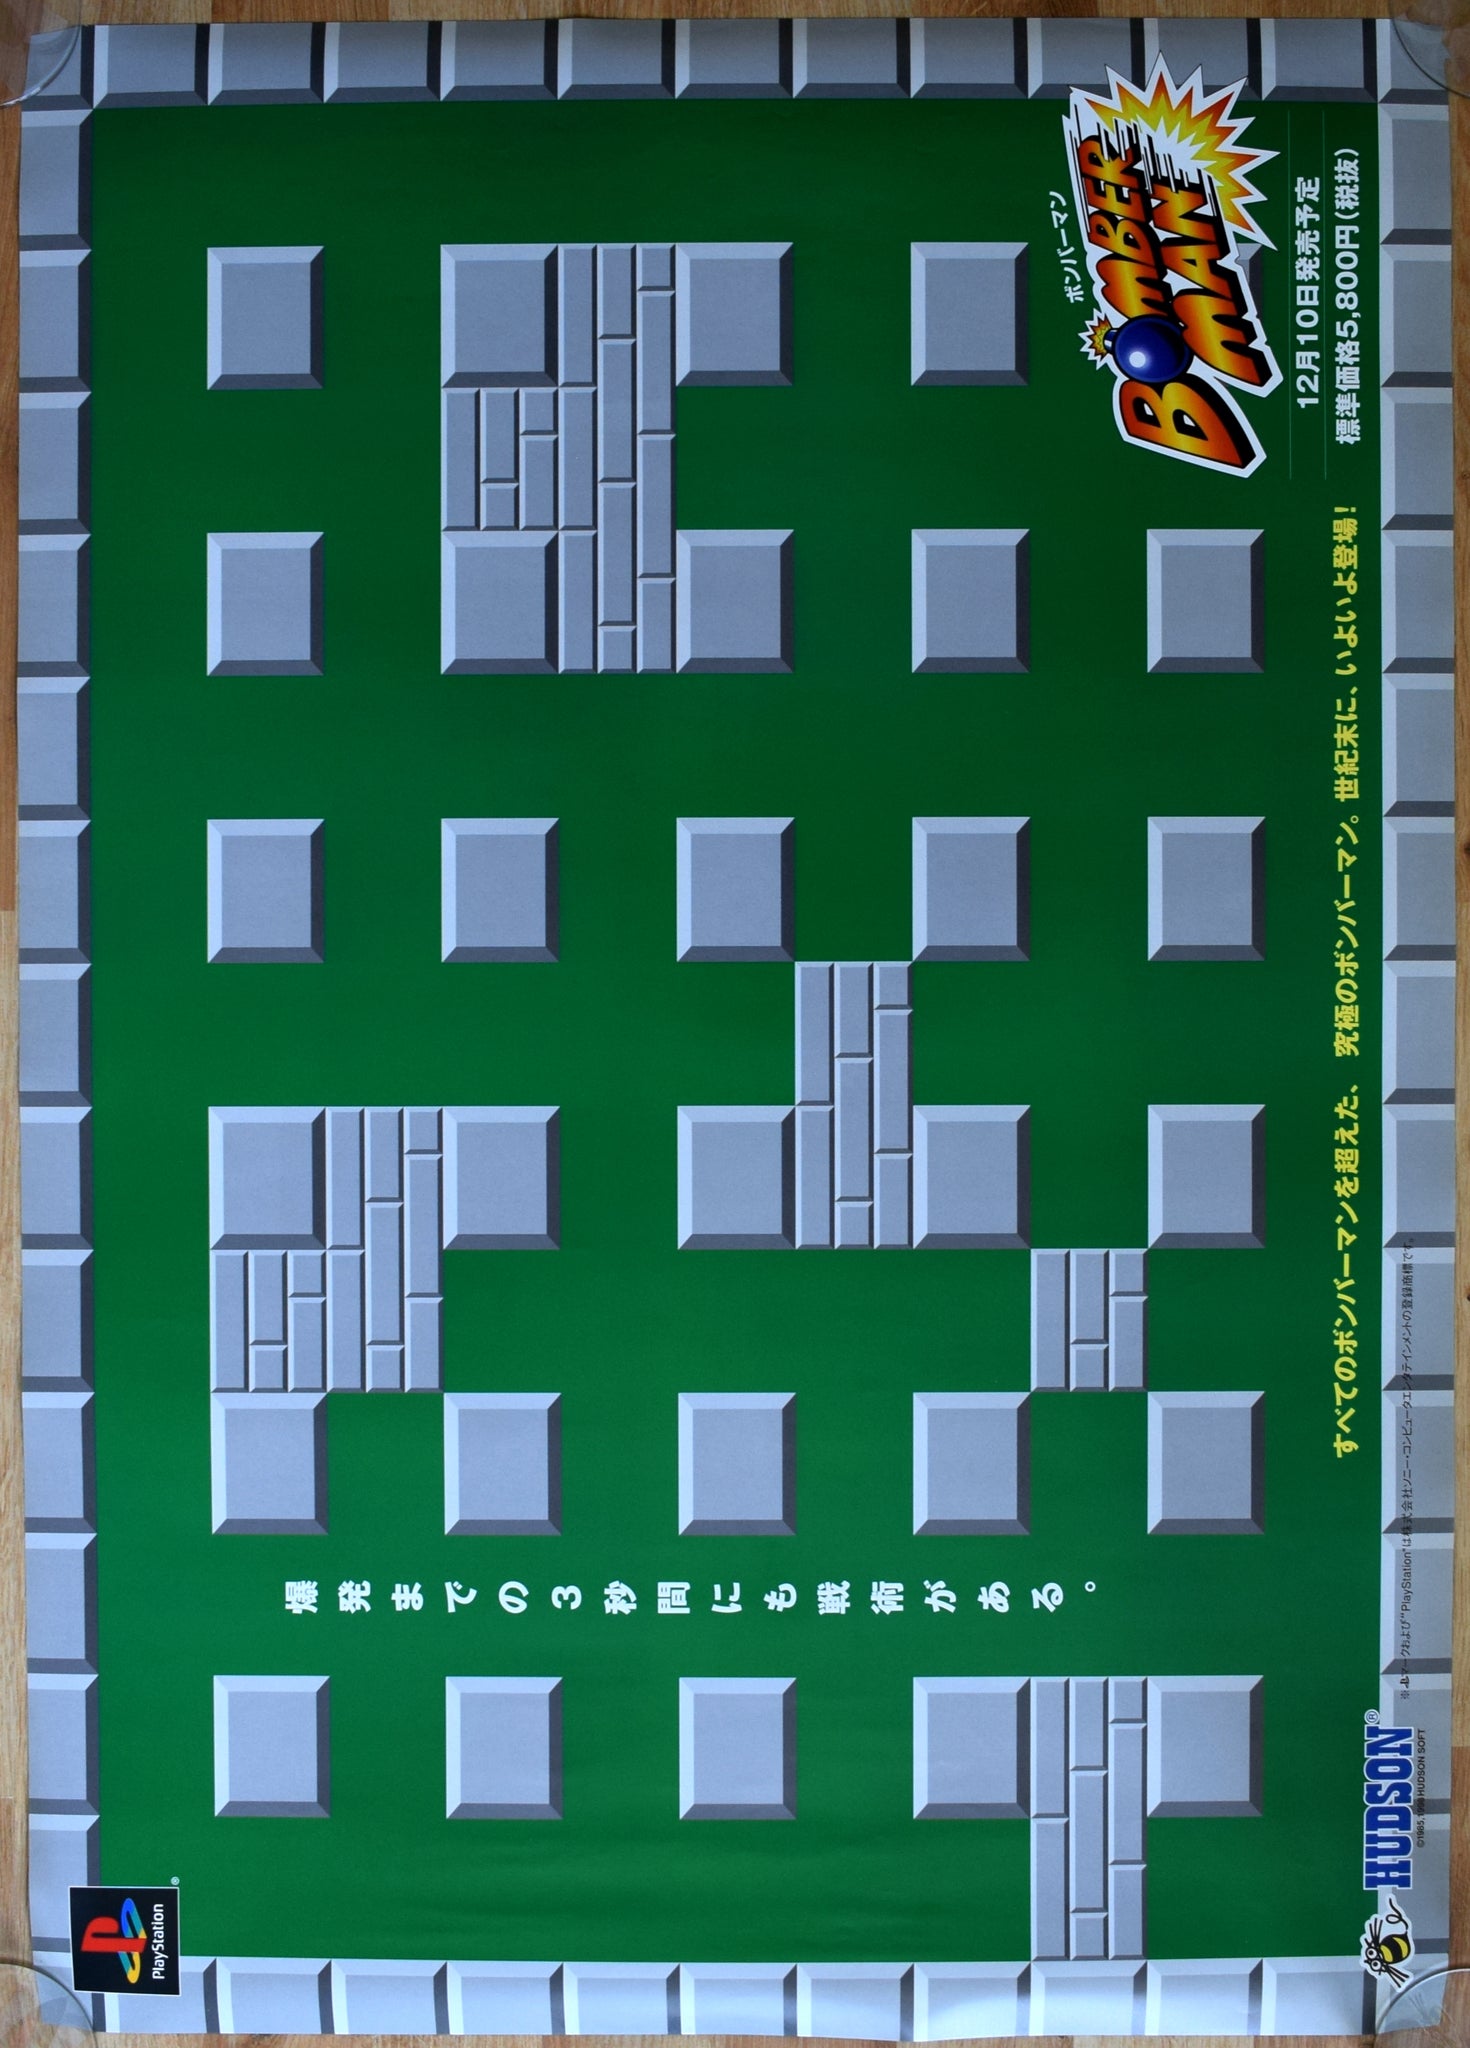 Bomberman (B2) Japanese Promotional Poster #2